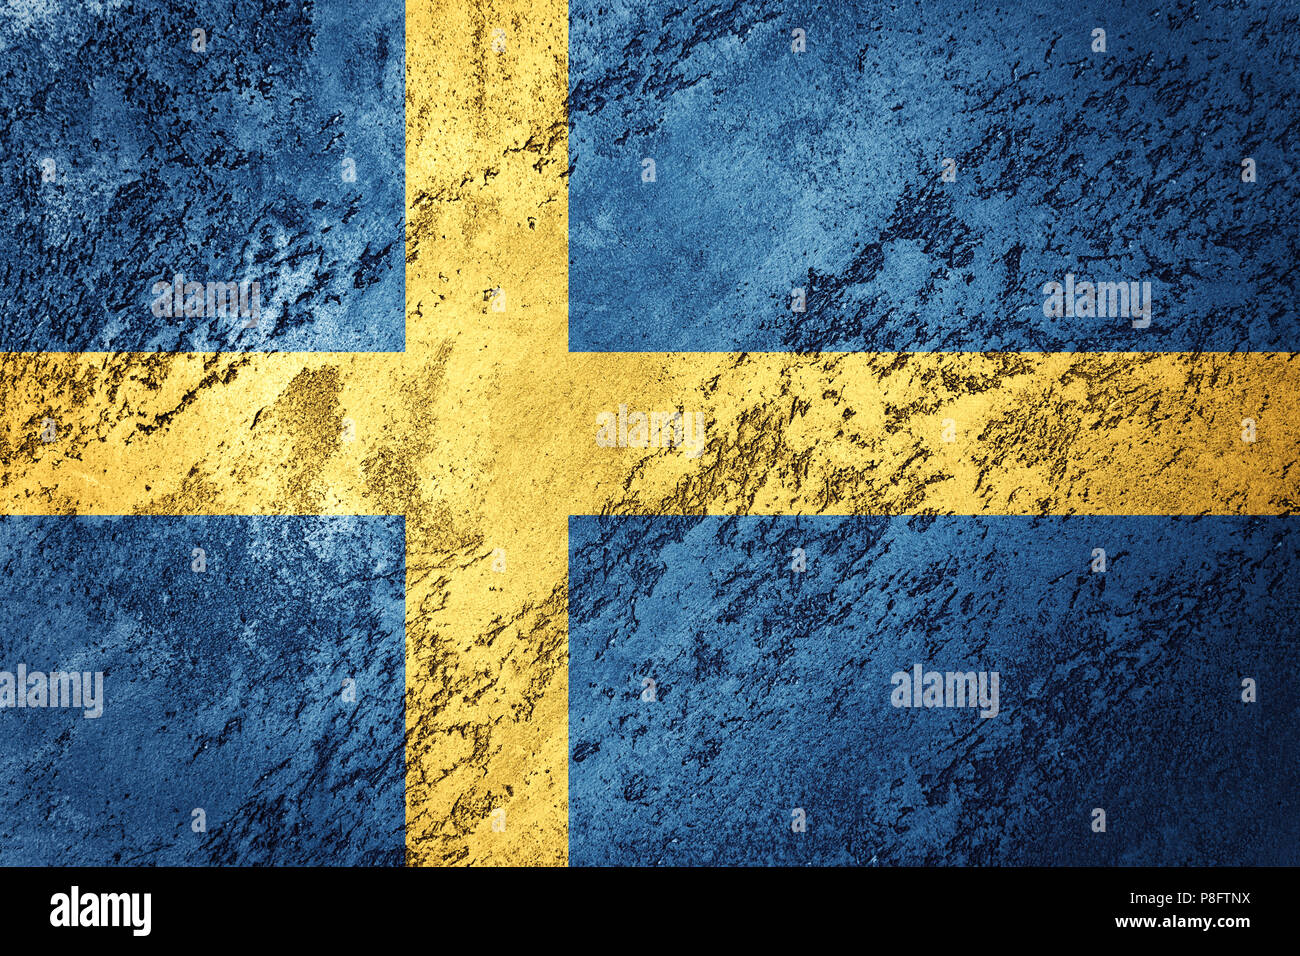 Grunge Sweden flag. Sweden flag with grunge texture. Stock Photo